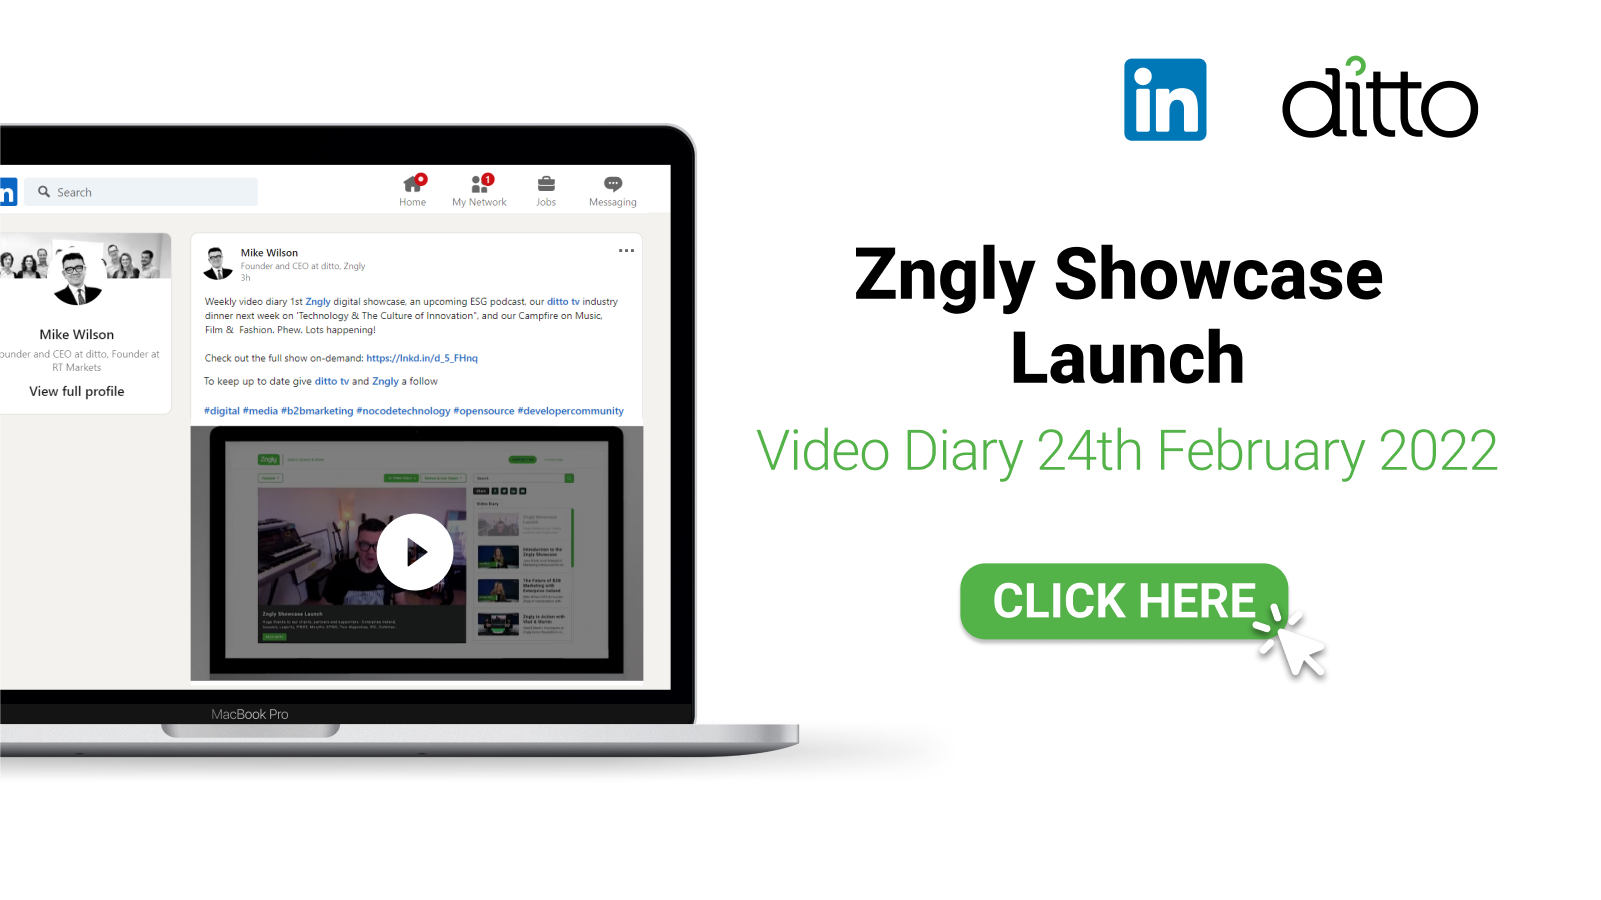 Zngly Showcase Launch